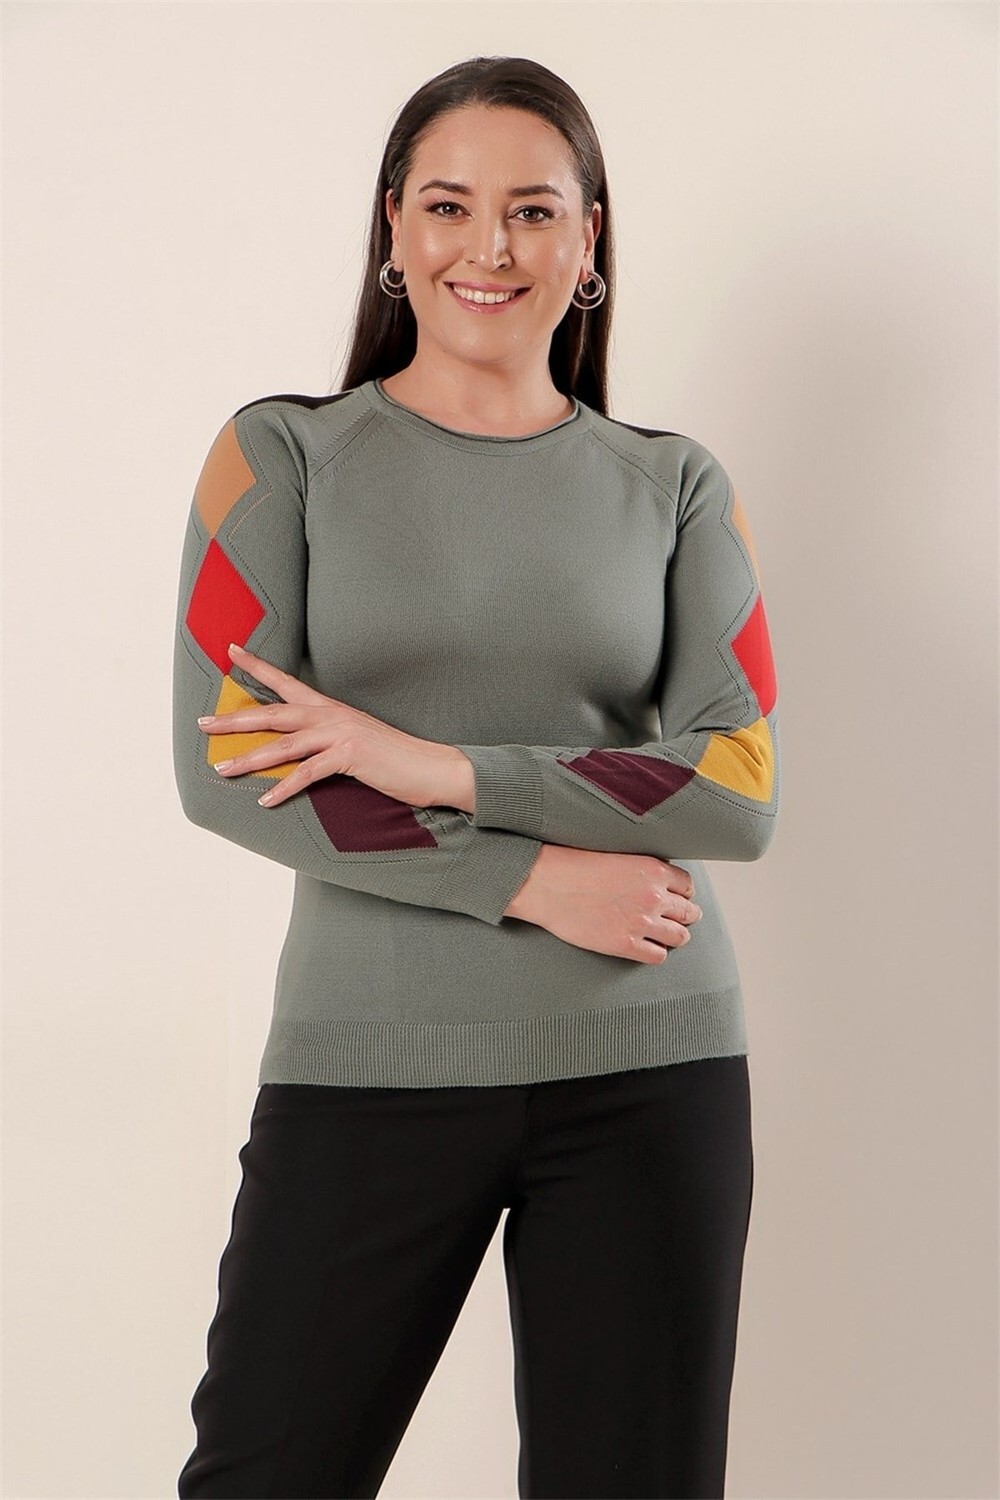 By Saygı Sleeves Arrangement Pattern Front Short Back Long Plus Size Acrylic Sweater Water Green.